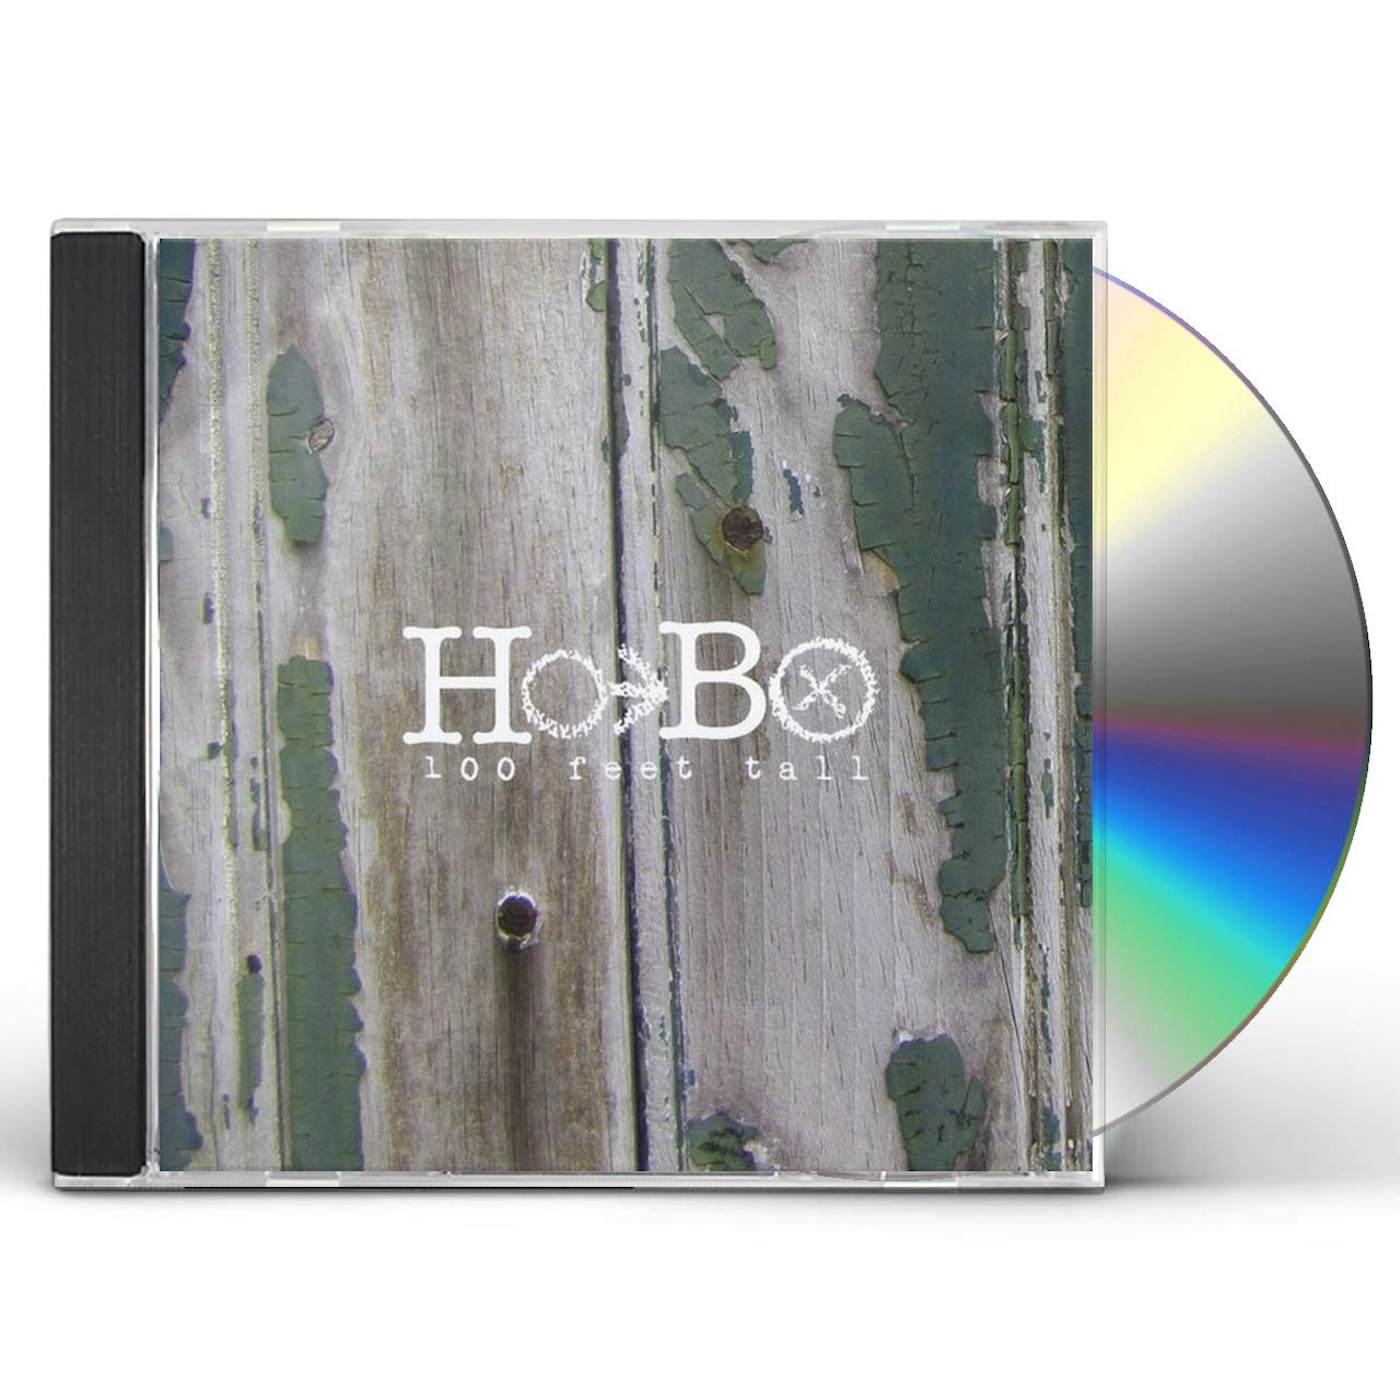 Hobo 100 FEET TALL CD